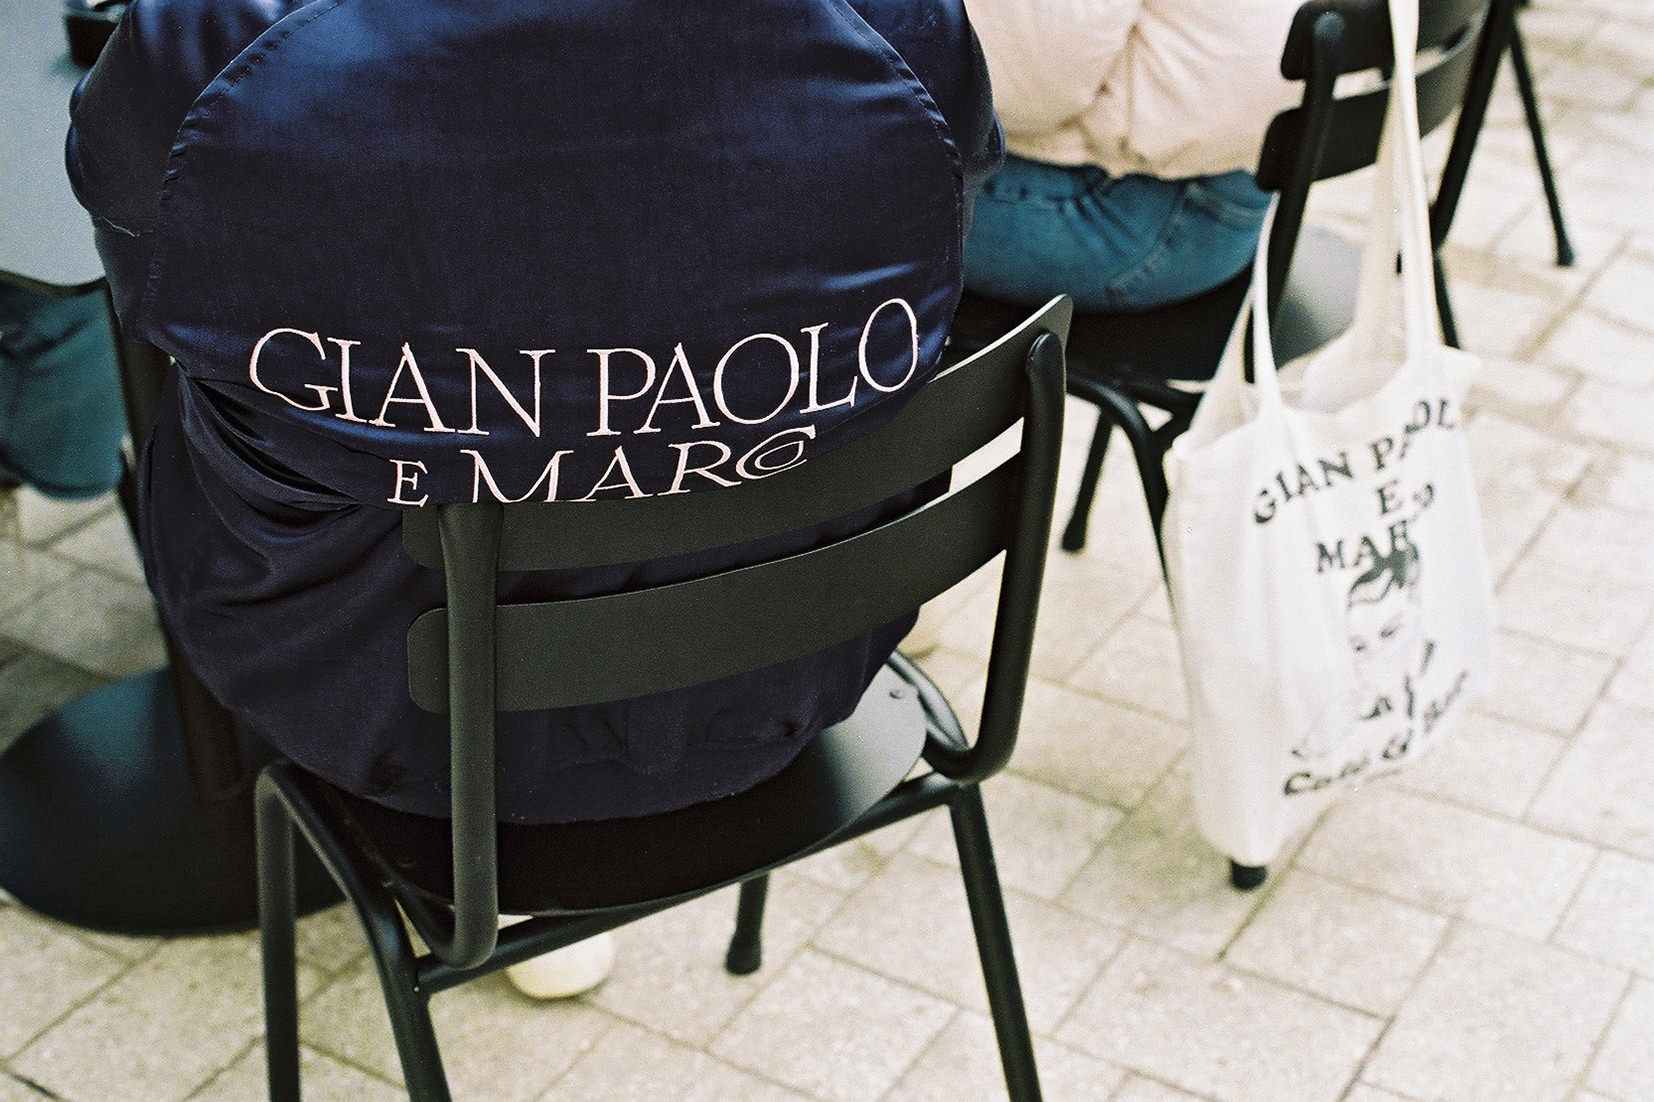 Gian Paolo e Marcos very own crew jackets — photo by Matthias Straub